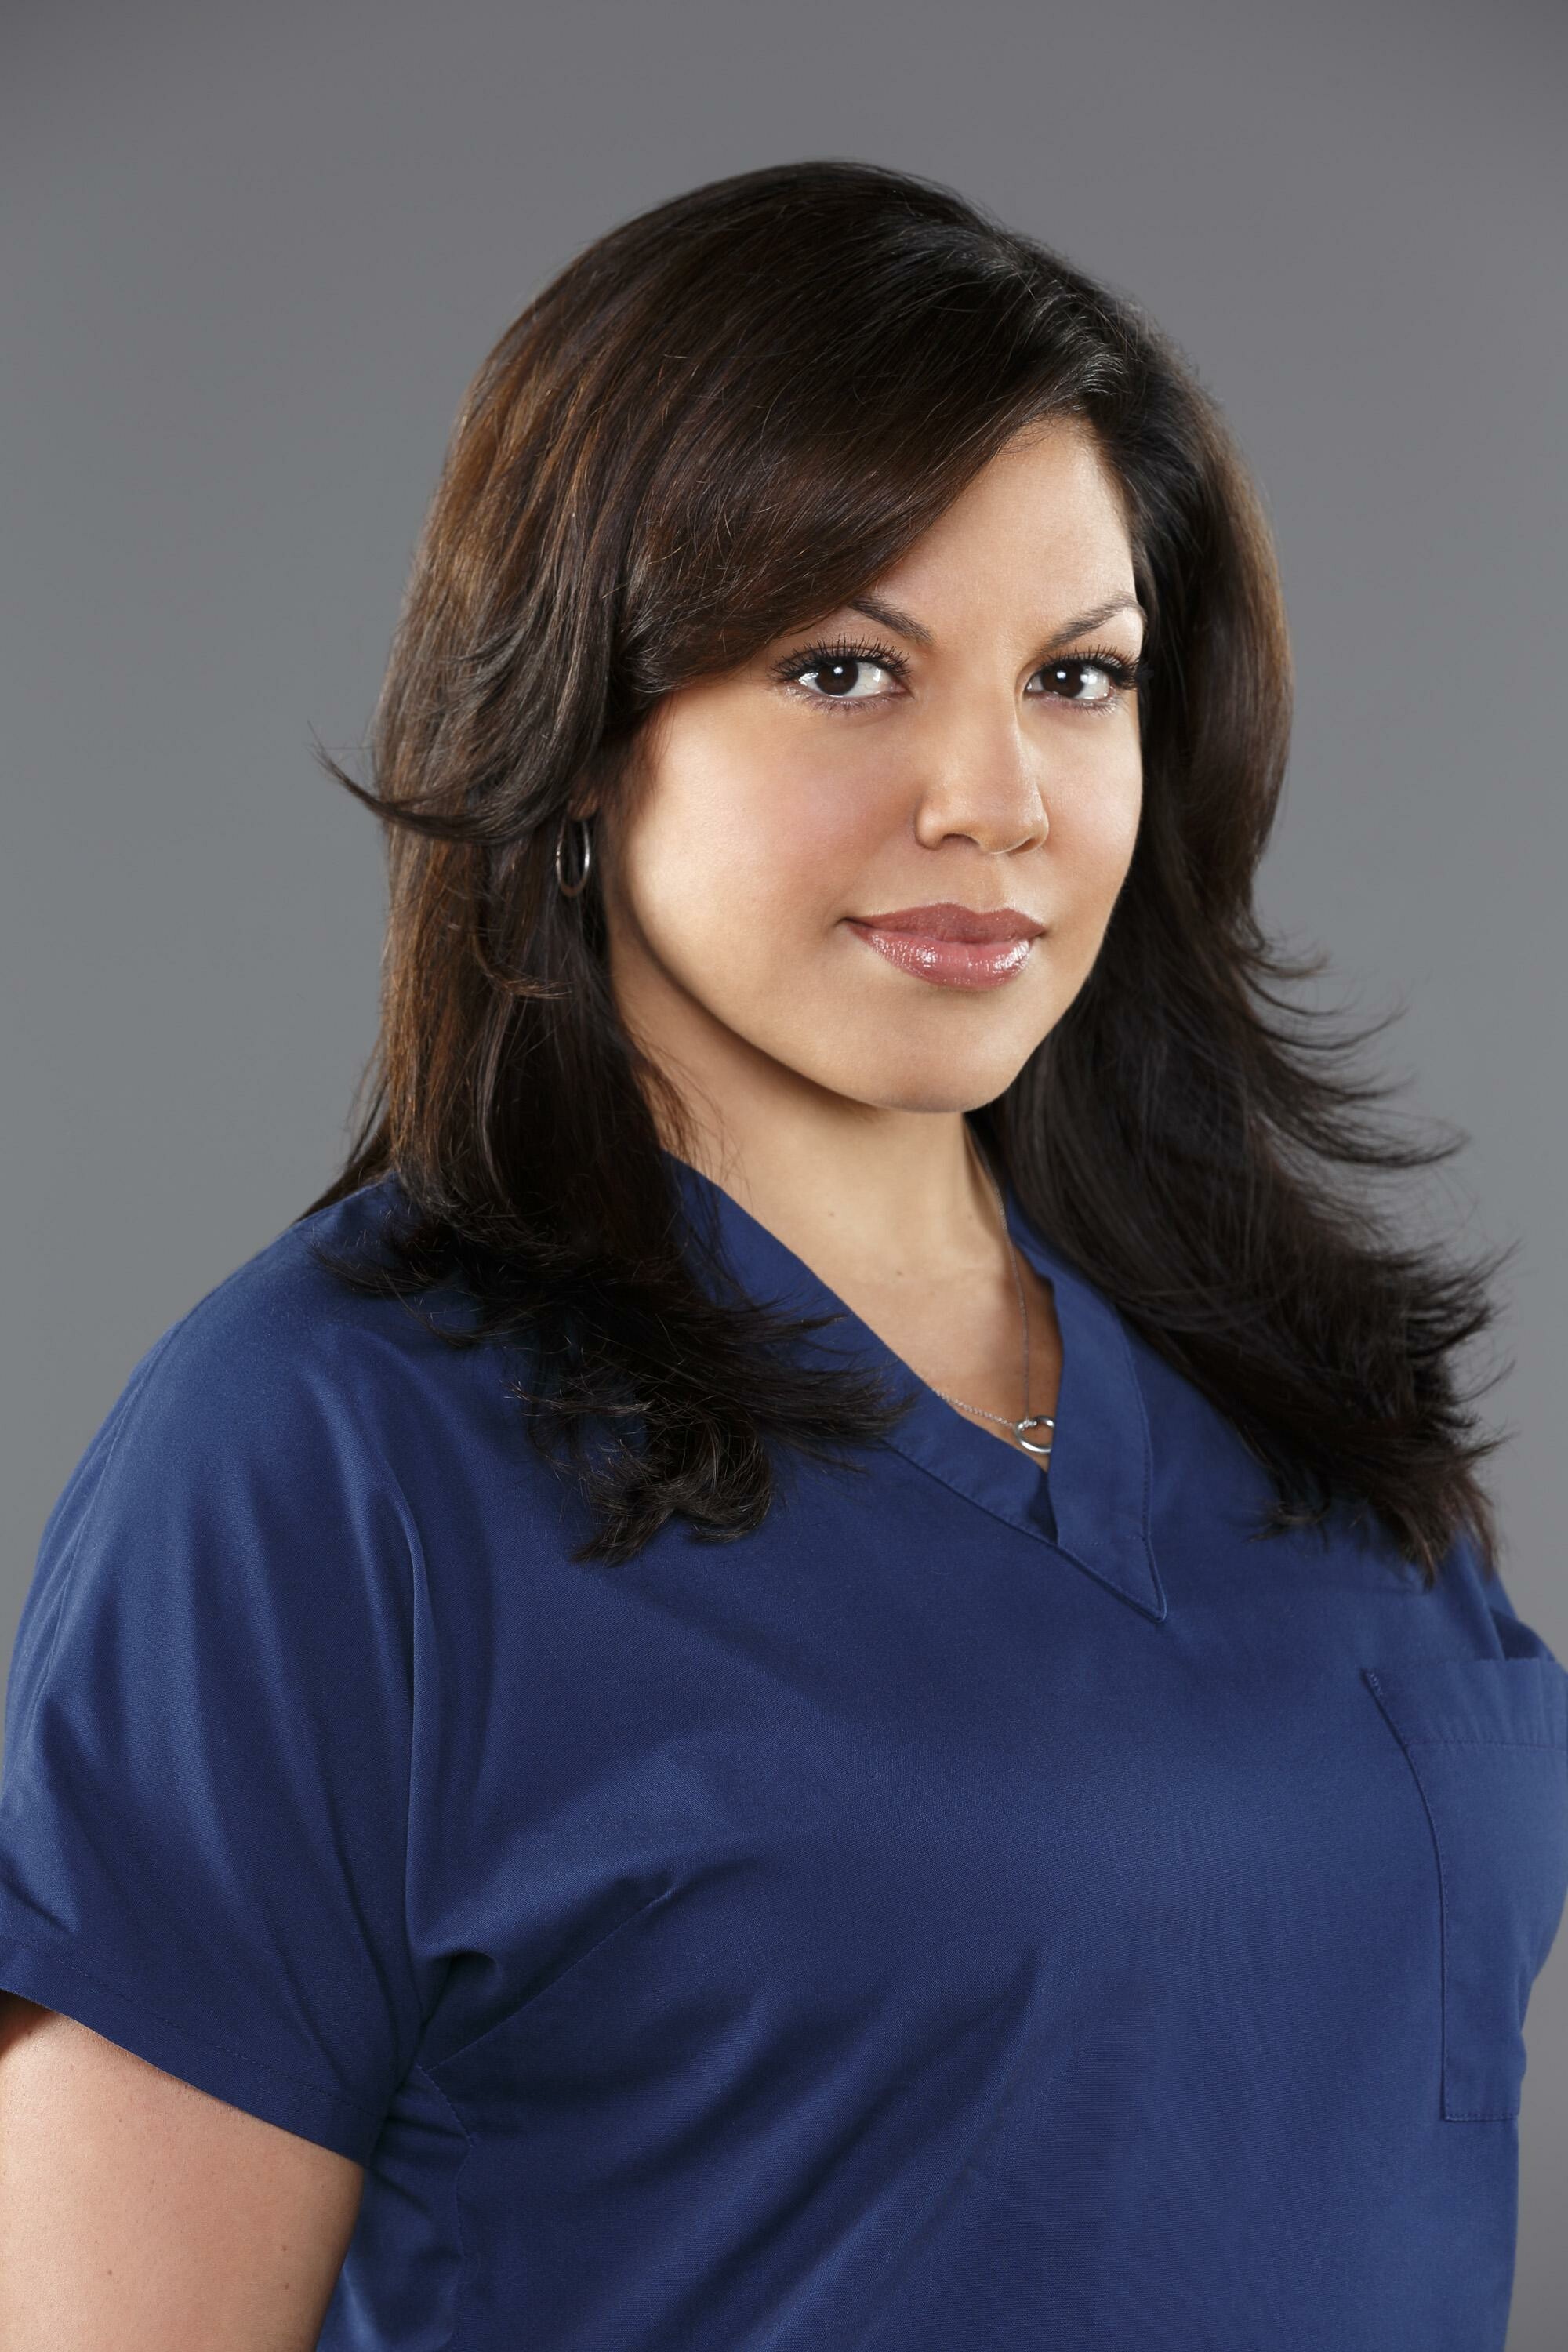 Sara Ramirez: Took part of Callie Torres, Grey's Anatomy character. 2000x3000 HD Wallpaper.